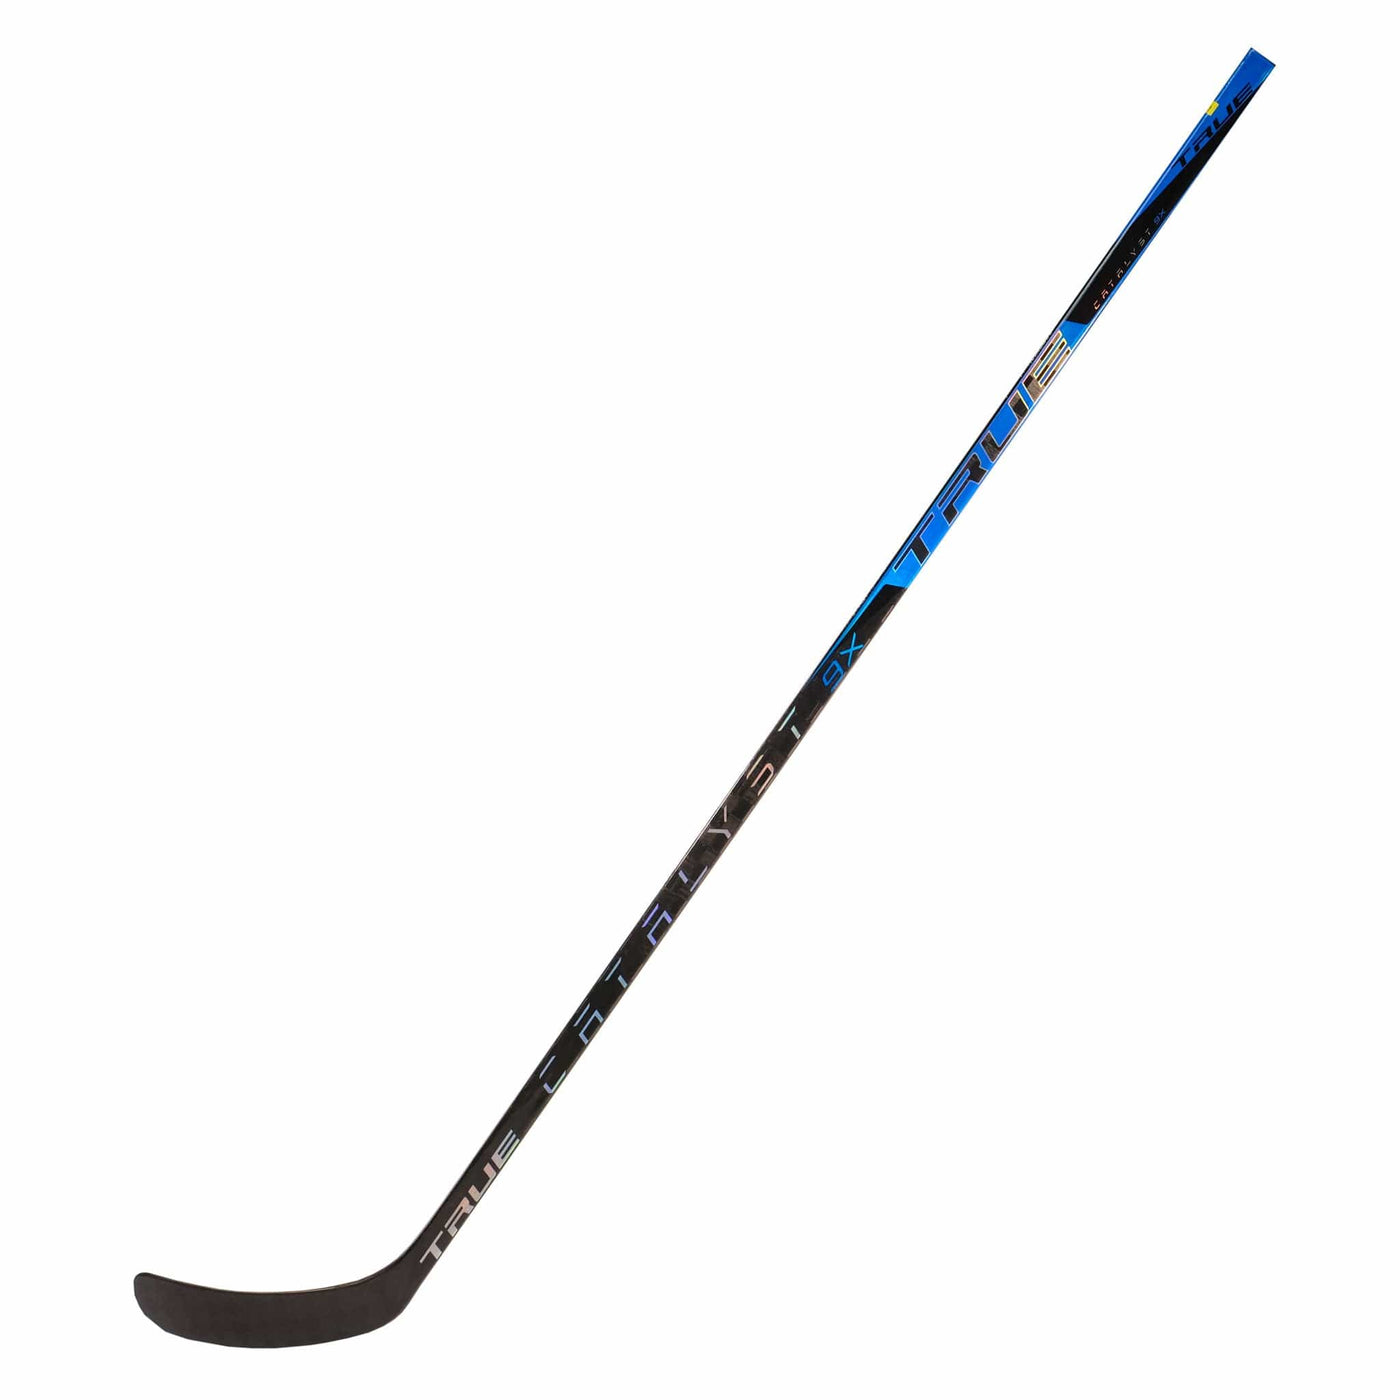 TRUE Catalyst 9X Pro Stock Senior Hockey Stick - Kaapo Kakko - TC2 - L-70 - The Hockey Shop Source For Sports